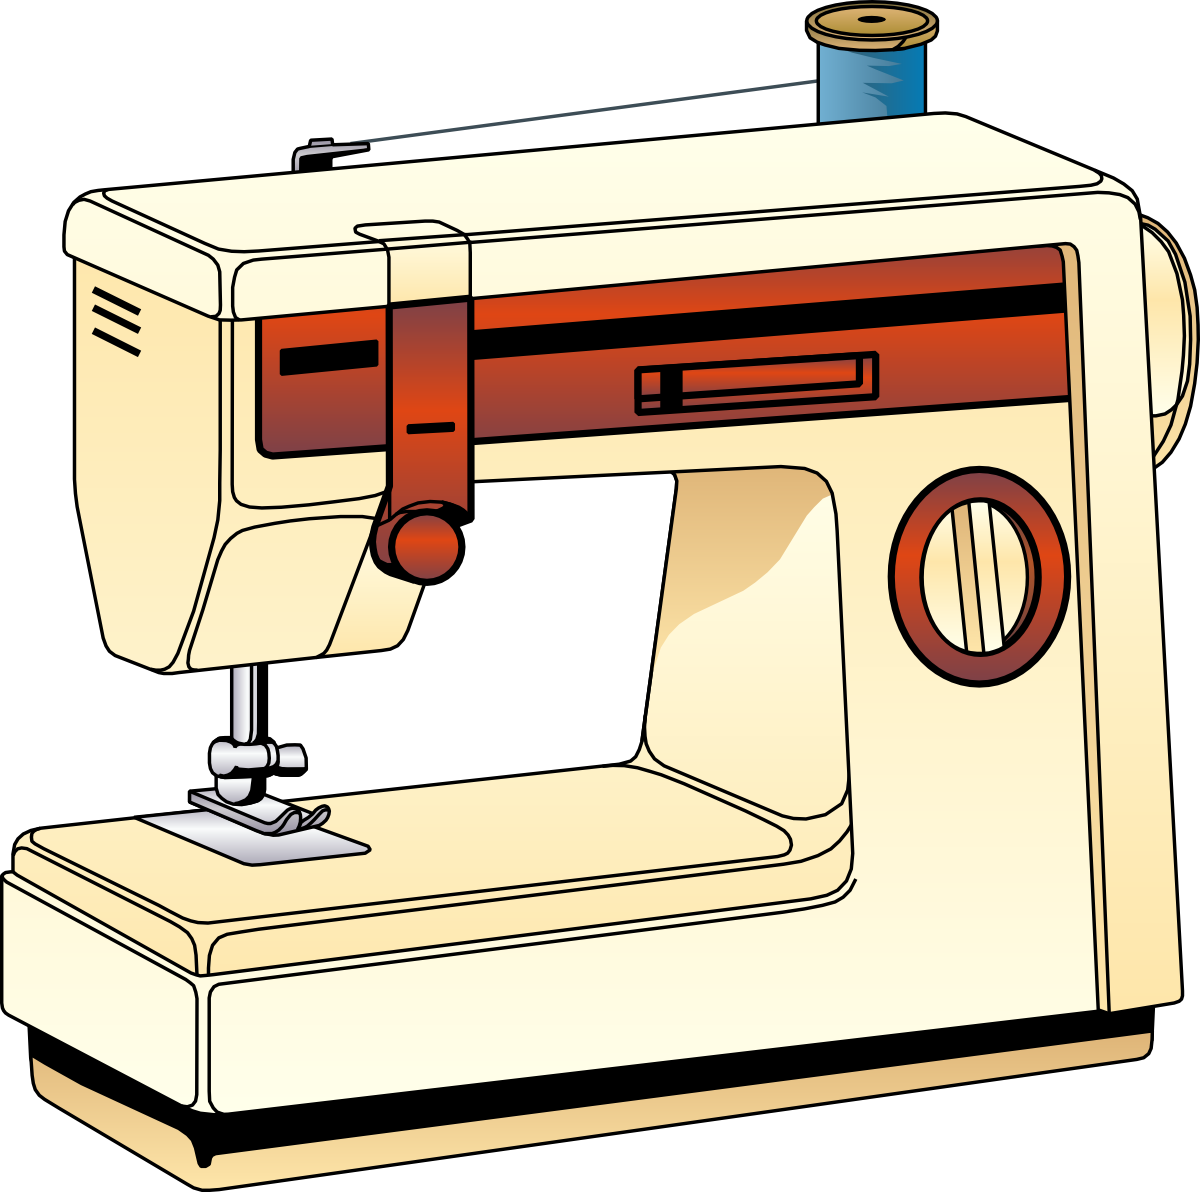 Sewing Machine Clip Art - ClipArt Best - ClipArt Best